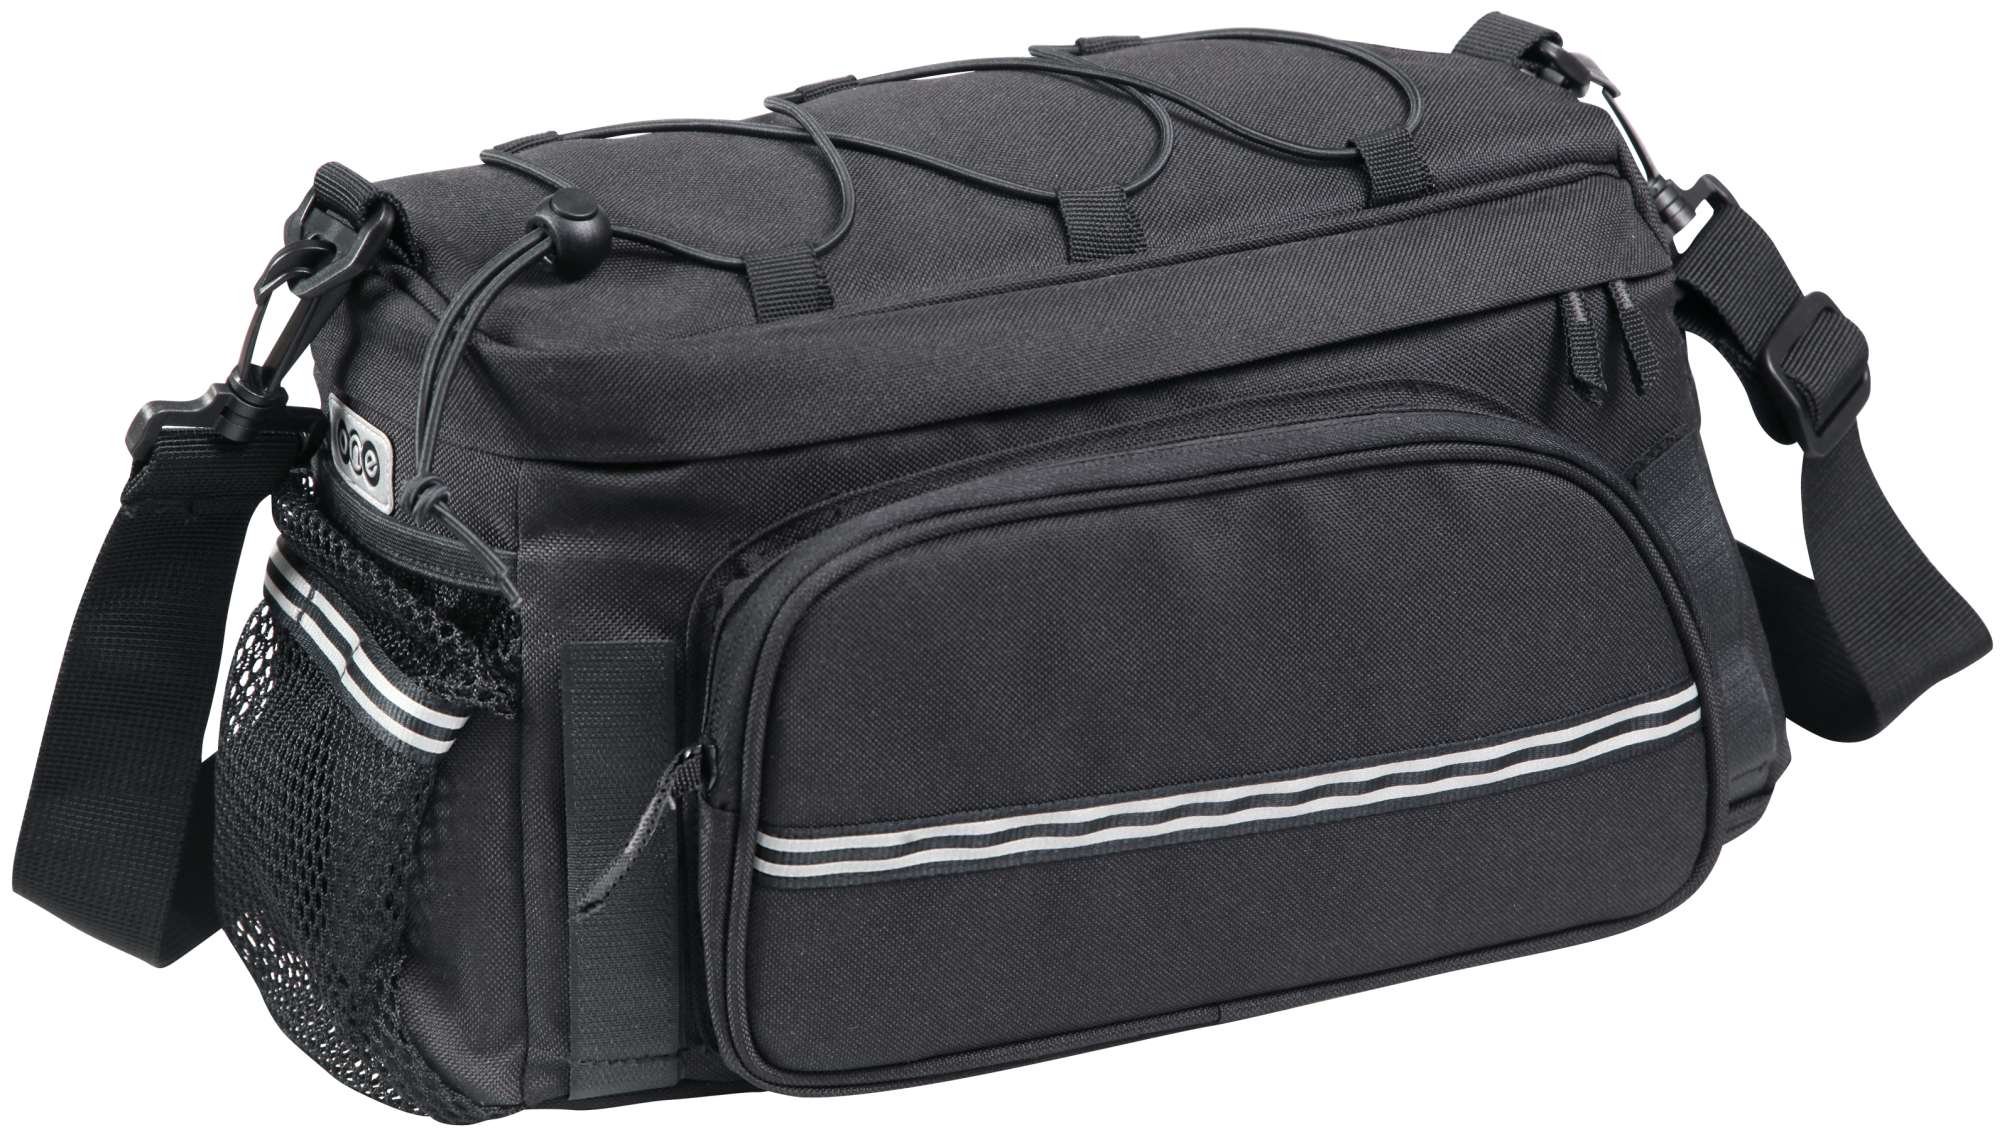 TRAVEL - Carrier bag